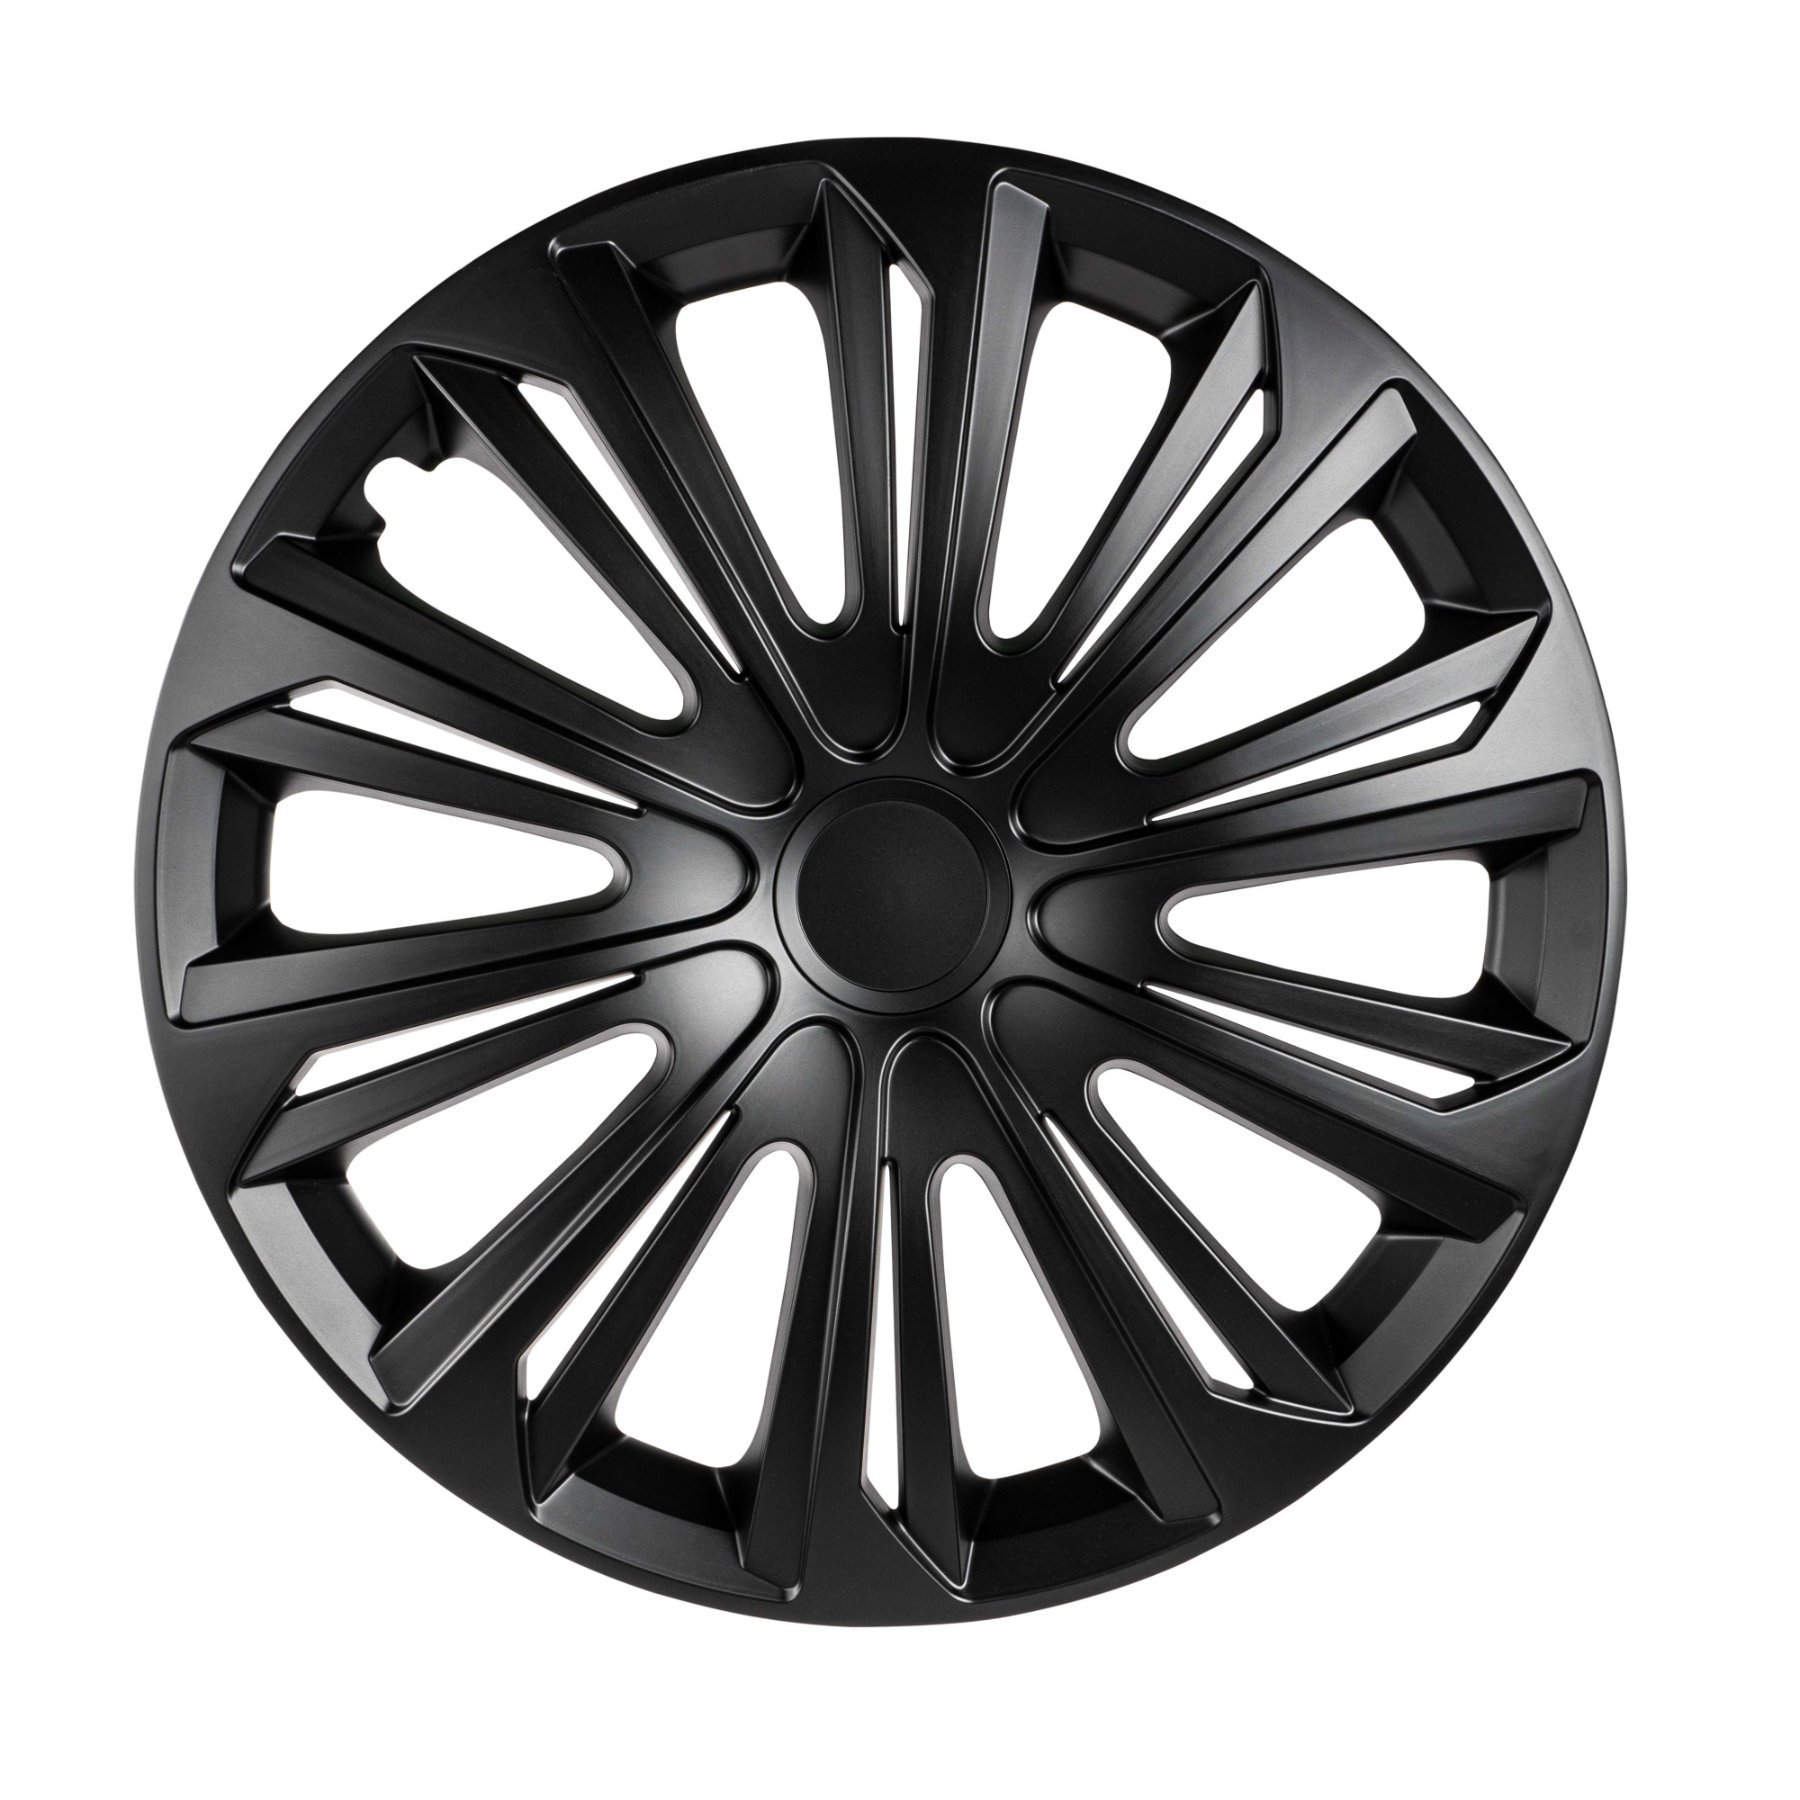 Wheel covers Racer 16", 4 piece black